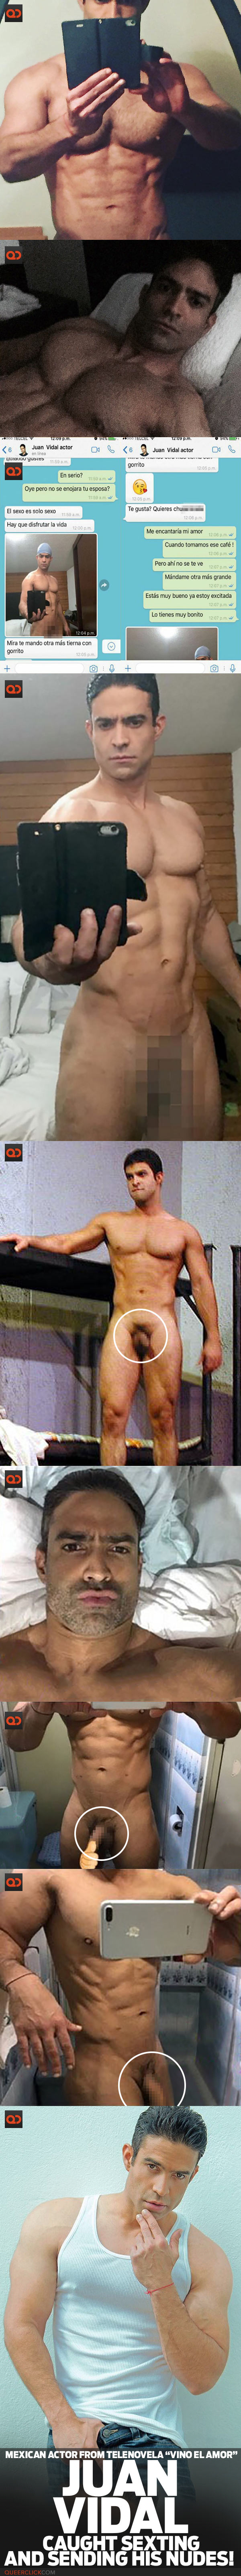 Juan Vidal, Mexican Actor From Telenovela “Vino El Amor”, Caught Sexting And Sending His Nudes!